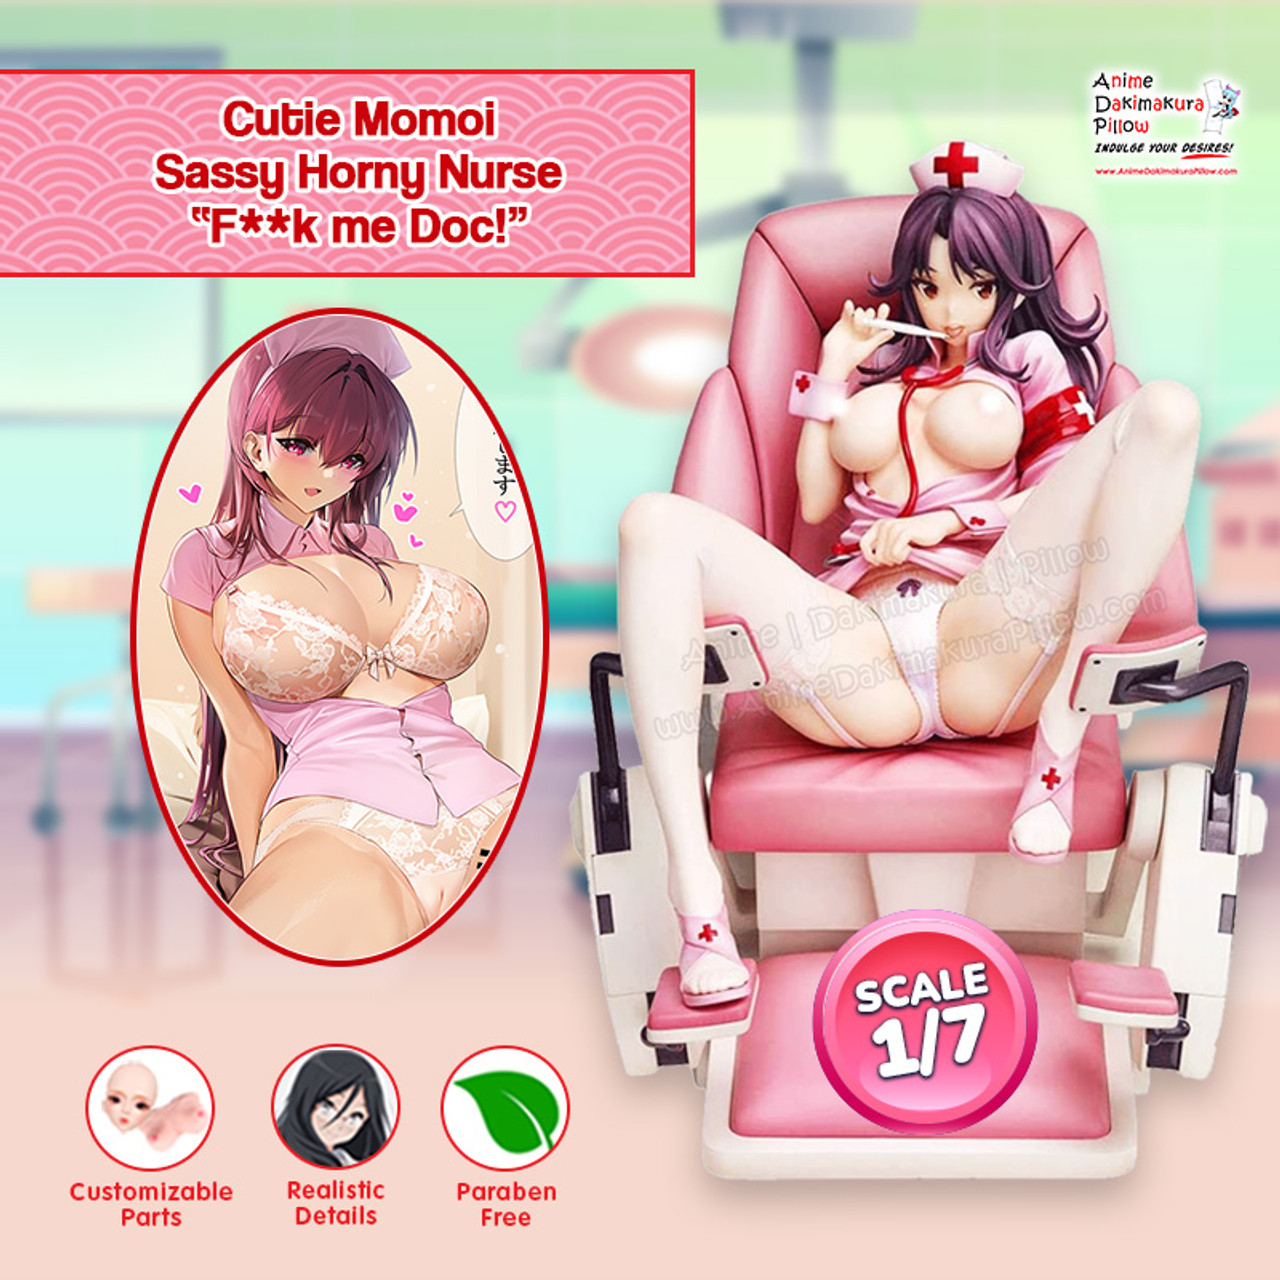 ADP Cutie Momoi Sassy Horny Nurse “Fuck me Doc!” 18+ Anime Figurine OH-FG-024 picture